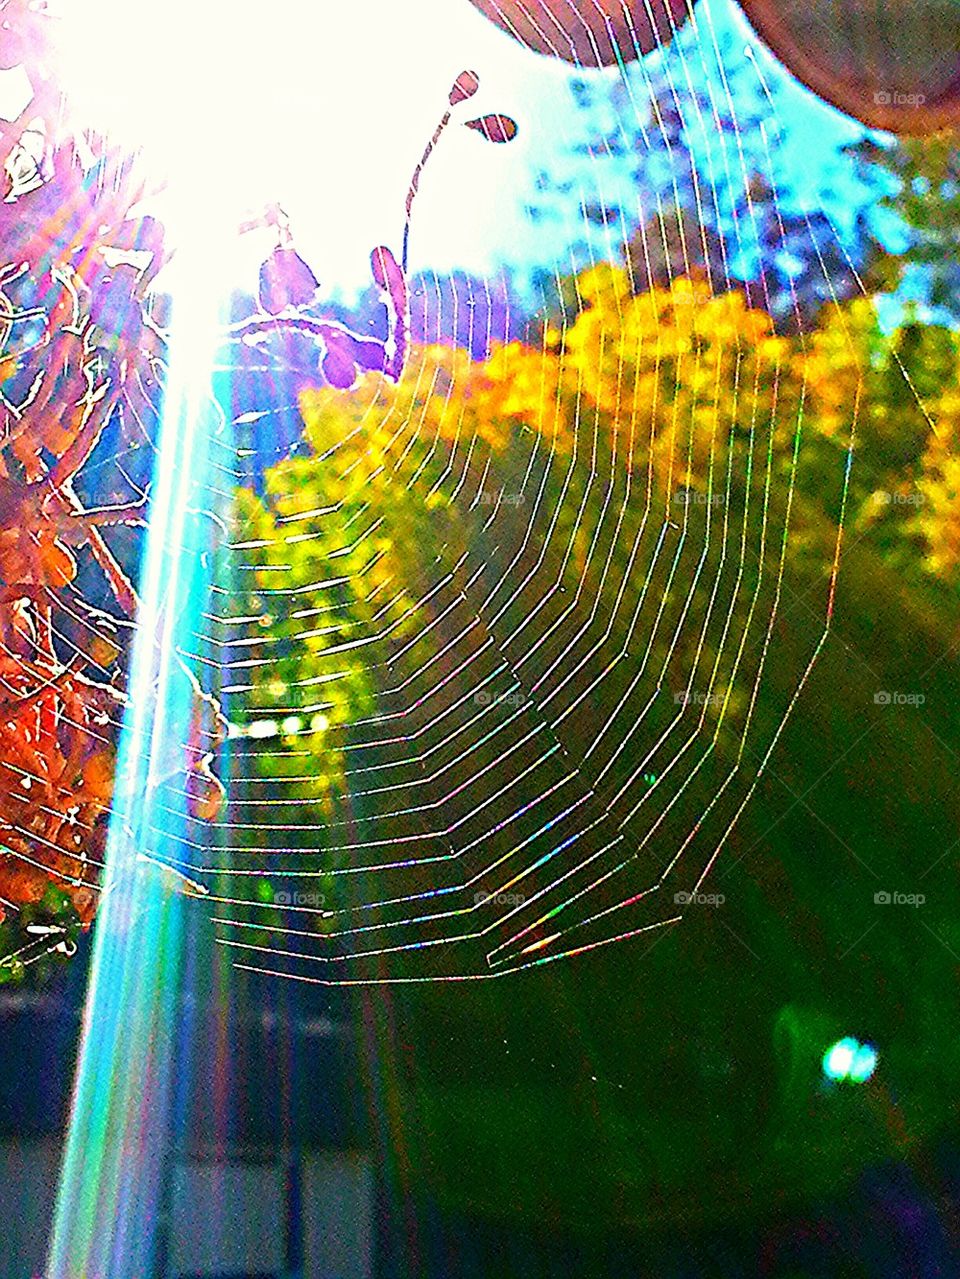 Sunlight through a Web